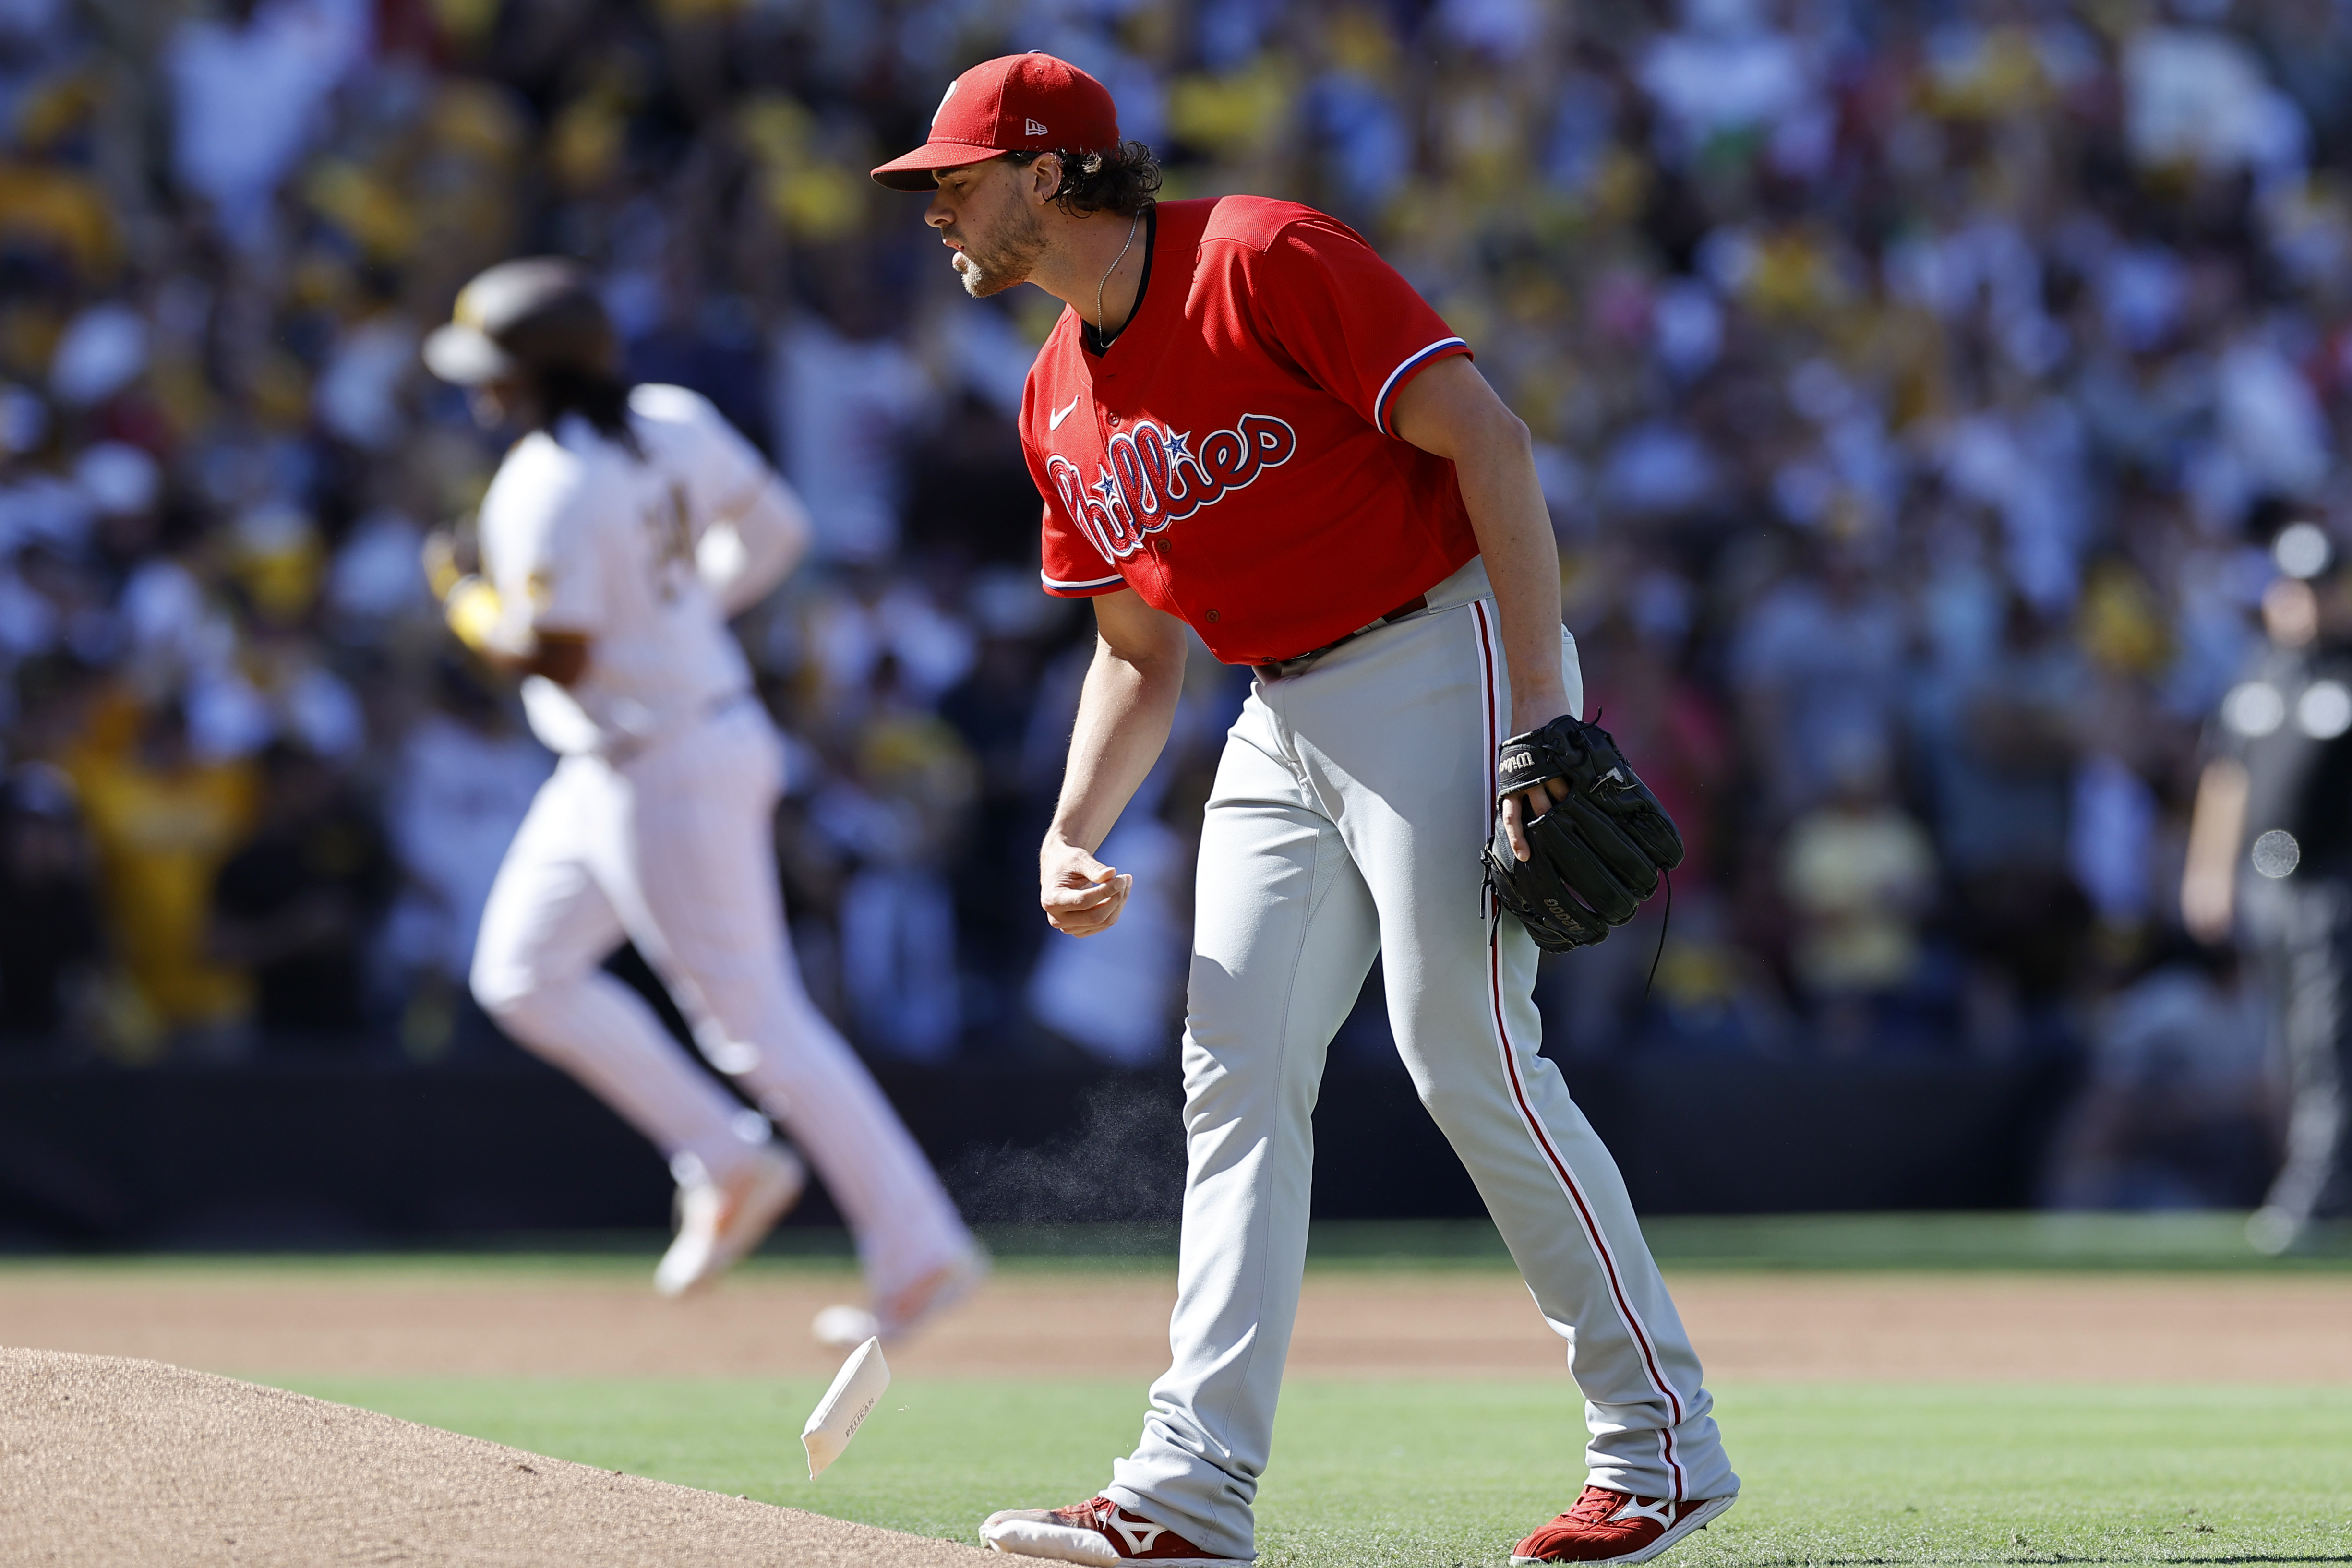 Aaron Nola Vs. Austin Nola Just Made History In MLB Postseason – OutKick